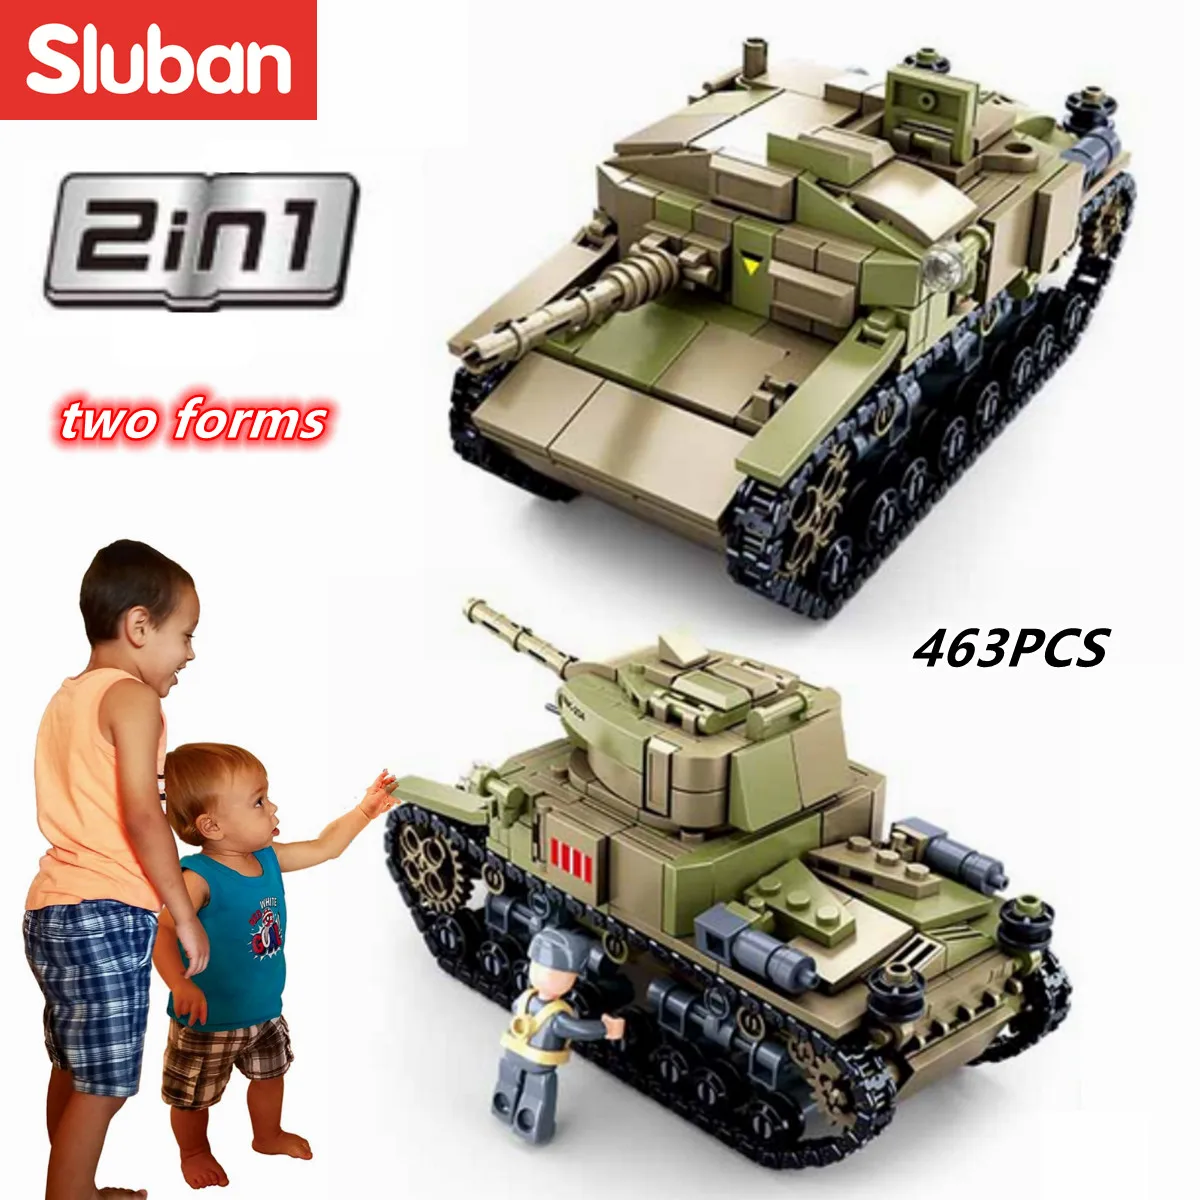 Sluban Building Block Toys WW2 M14/41 Medium Tank 463PCS Bricks B0711  Military Construction Compatbile With Leading Brands